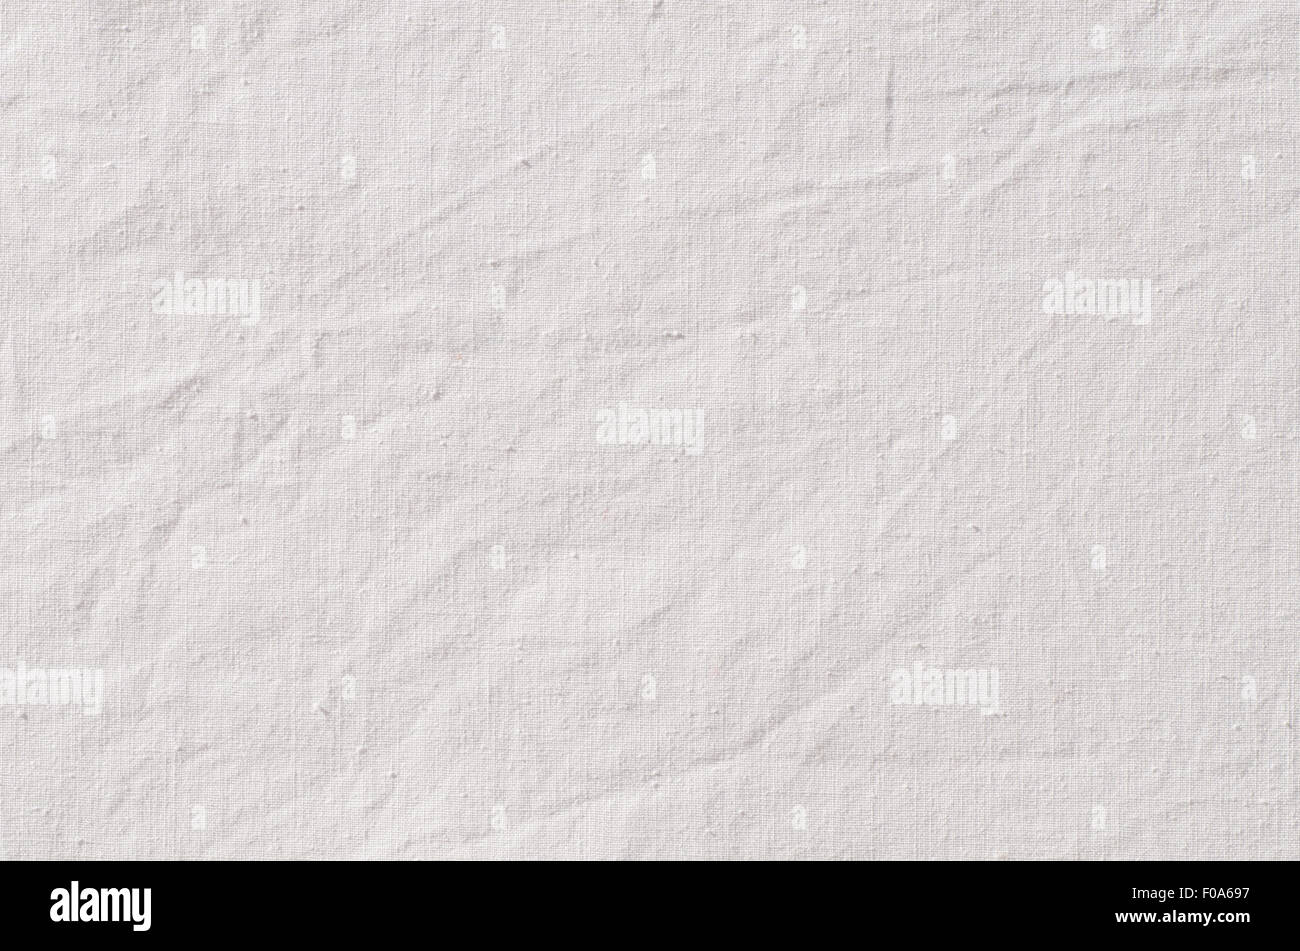 white wrinkled fabric texture background Stock Photo